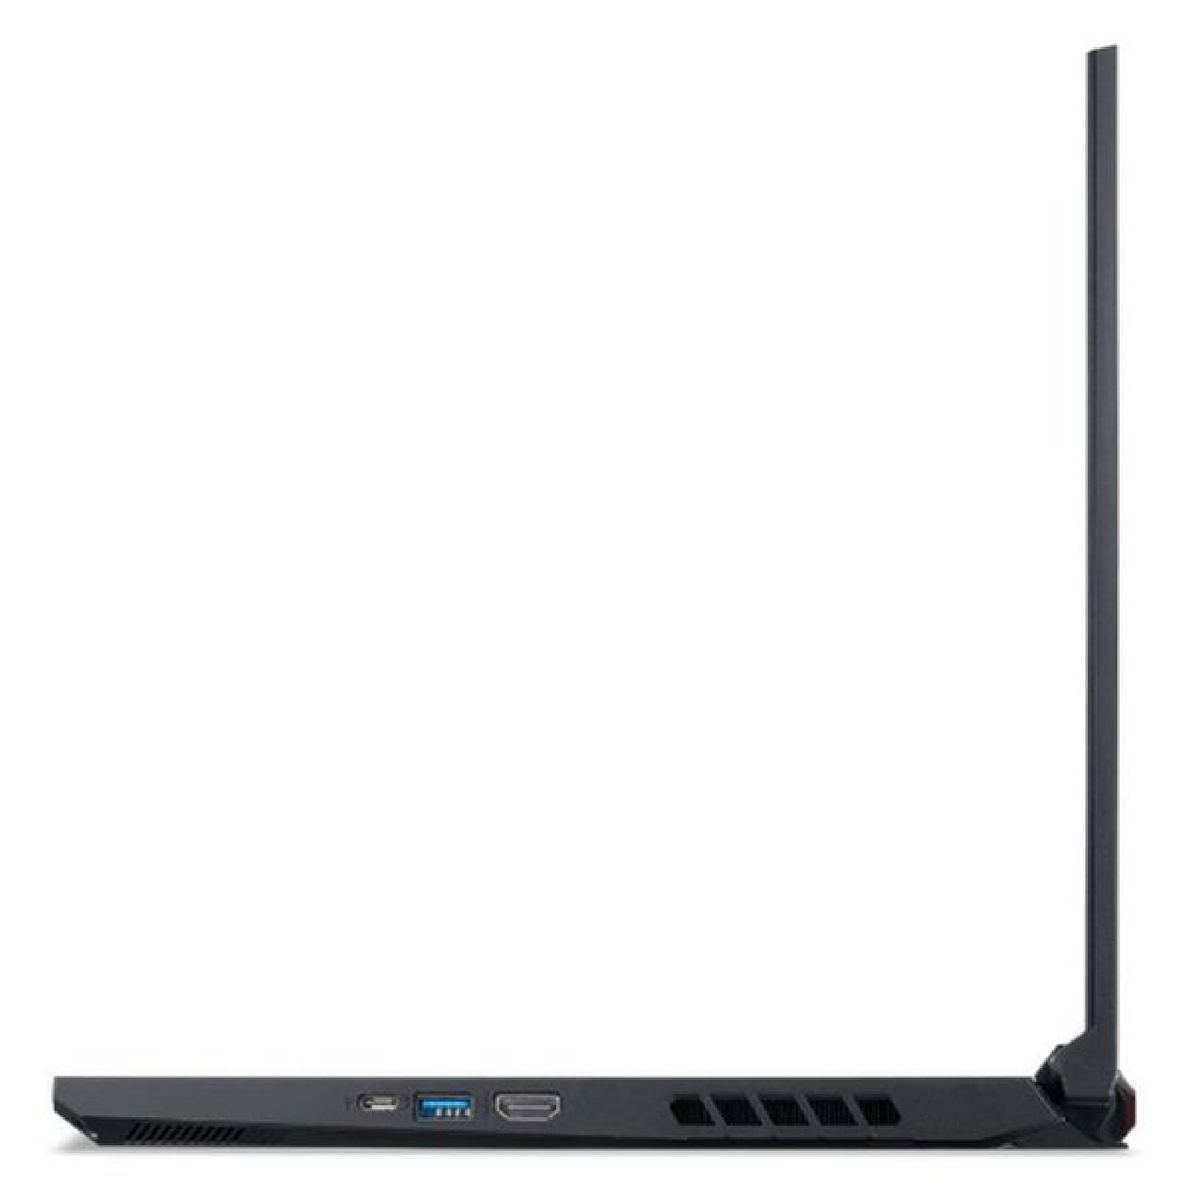 Acer Nitro 5 (AN515-55-72UN) Gaming Laptop,Intel Core i7-10750H,16GB RAM,1TB SSD,15.6"FHD,NVIDIA(R) GeForce GTX 1650 4GB,Windows 10,Obsidian Black